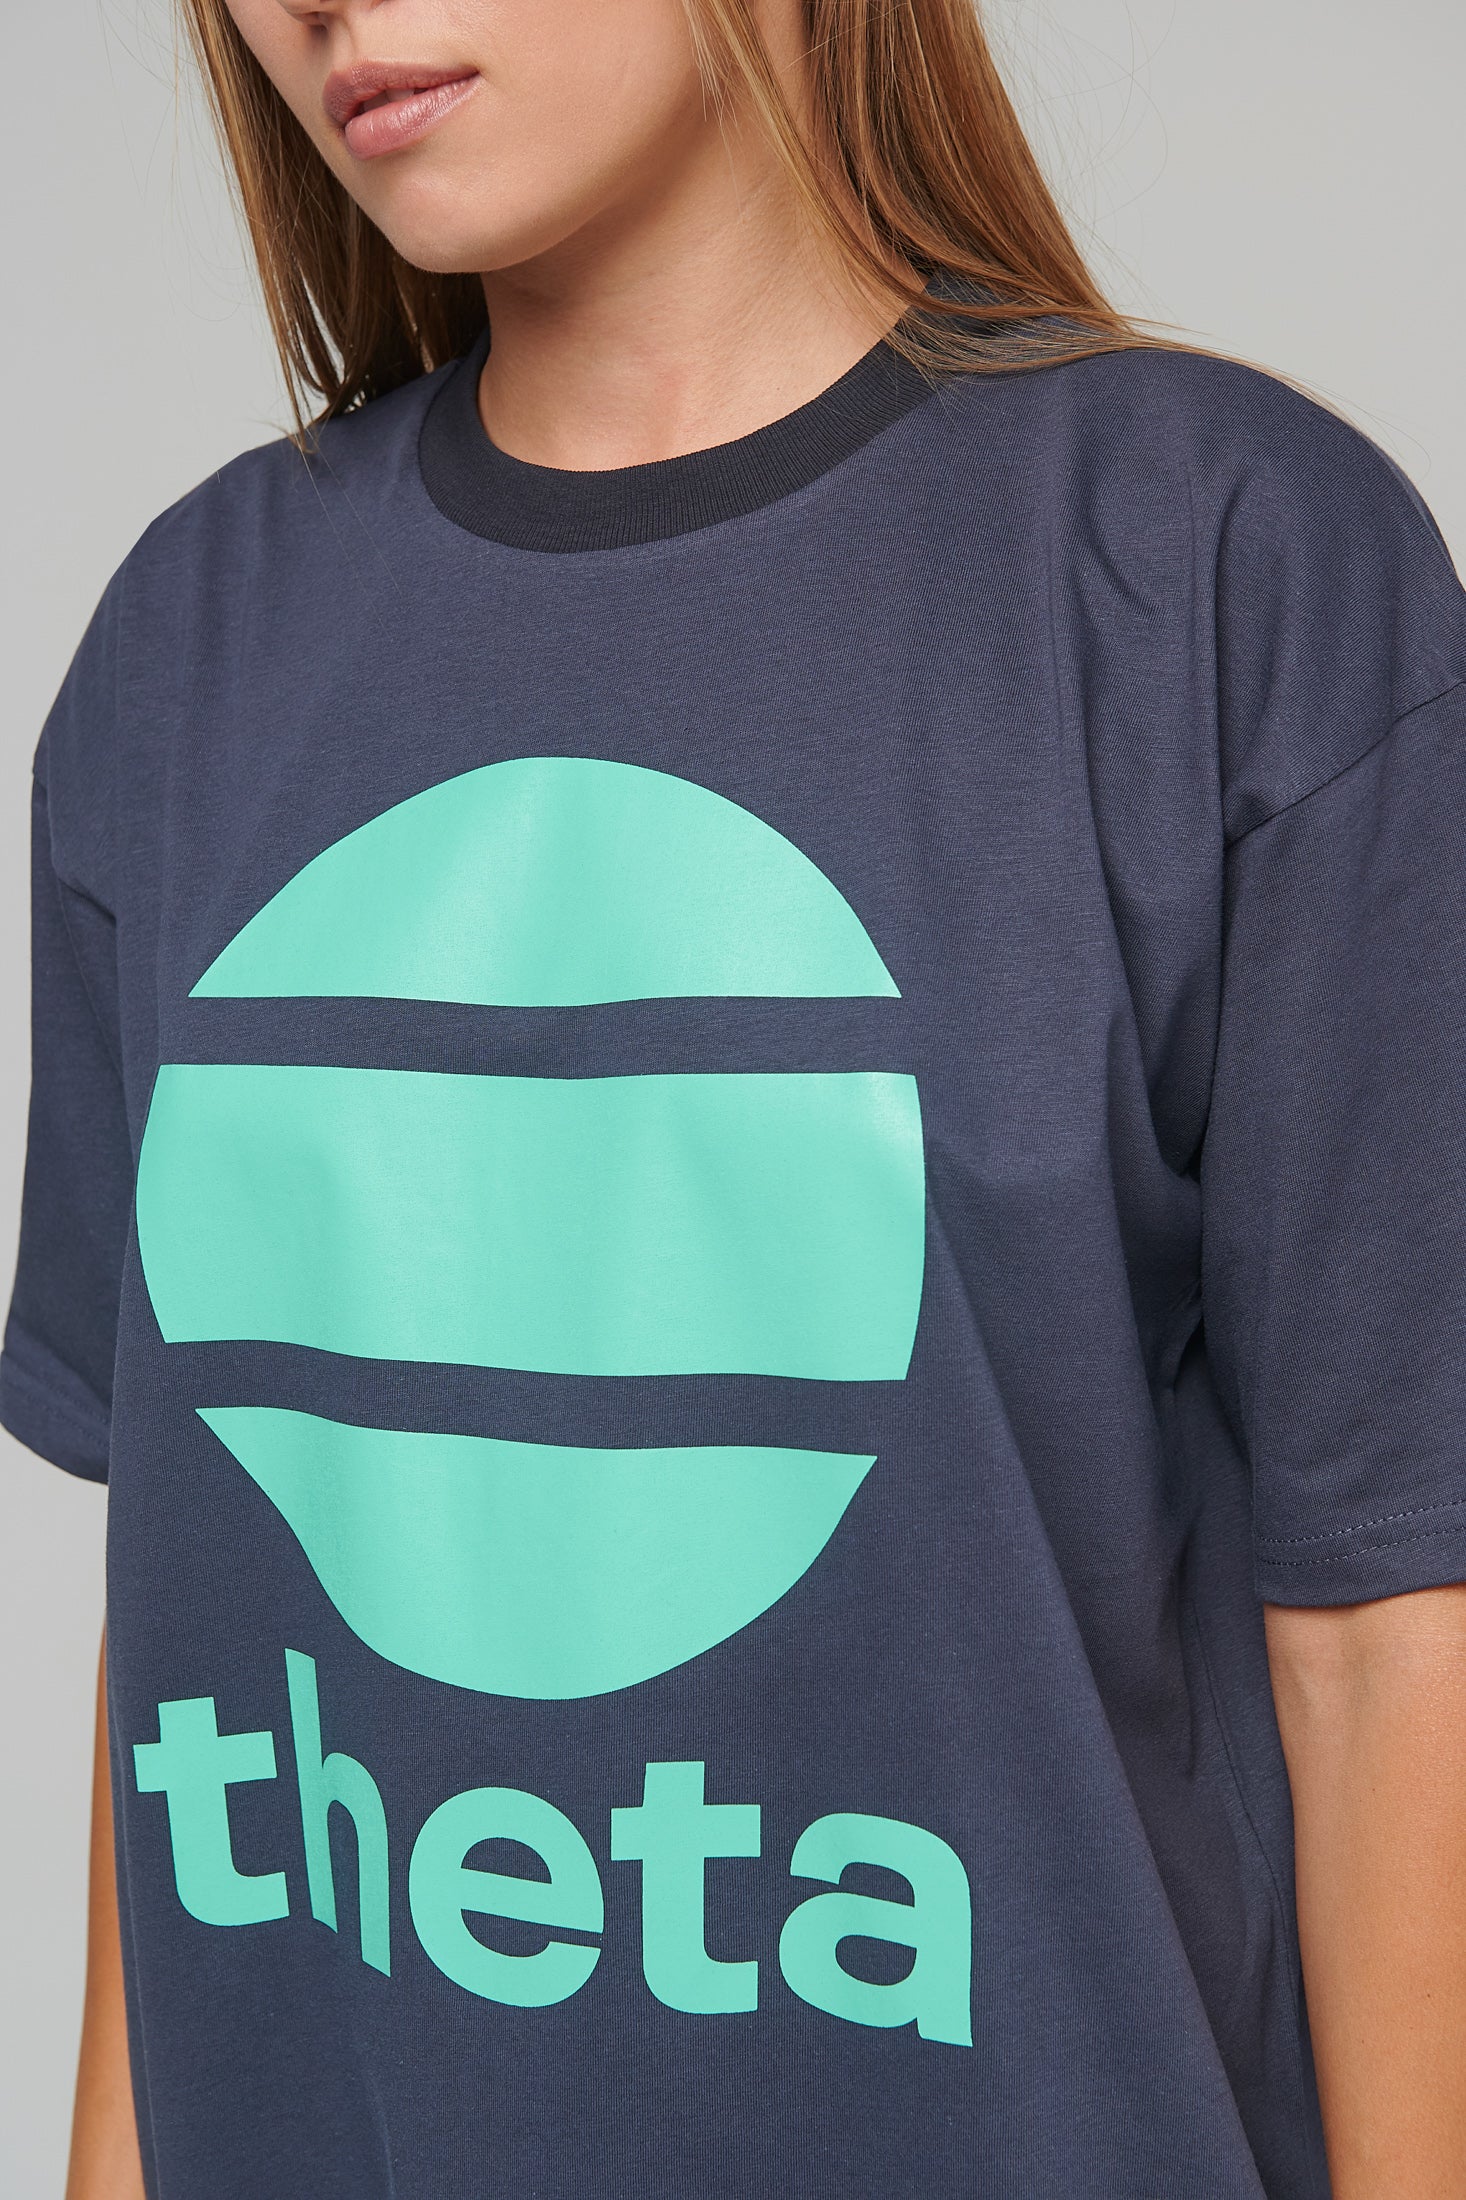 Robin's Theta Blue Unisex One size T-shirt